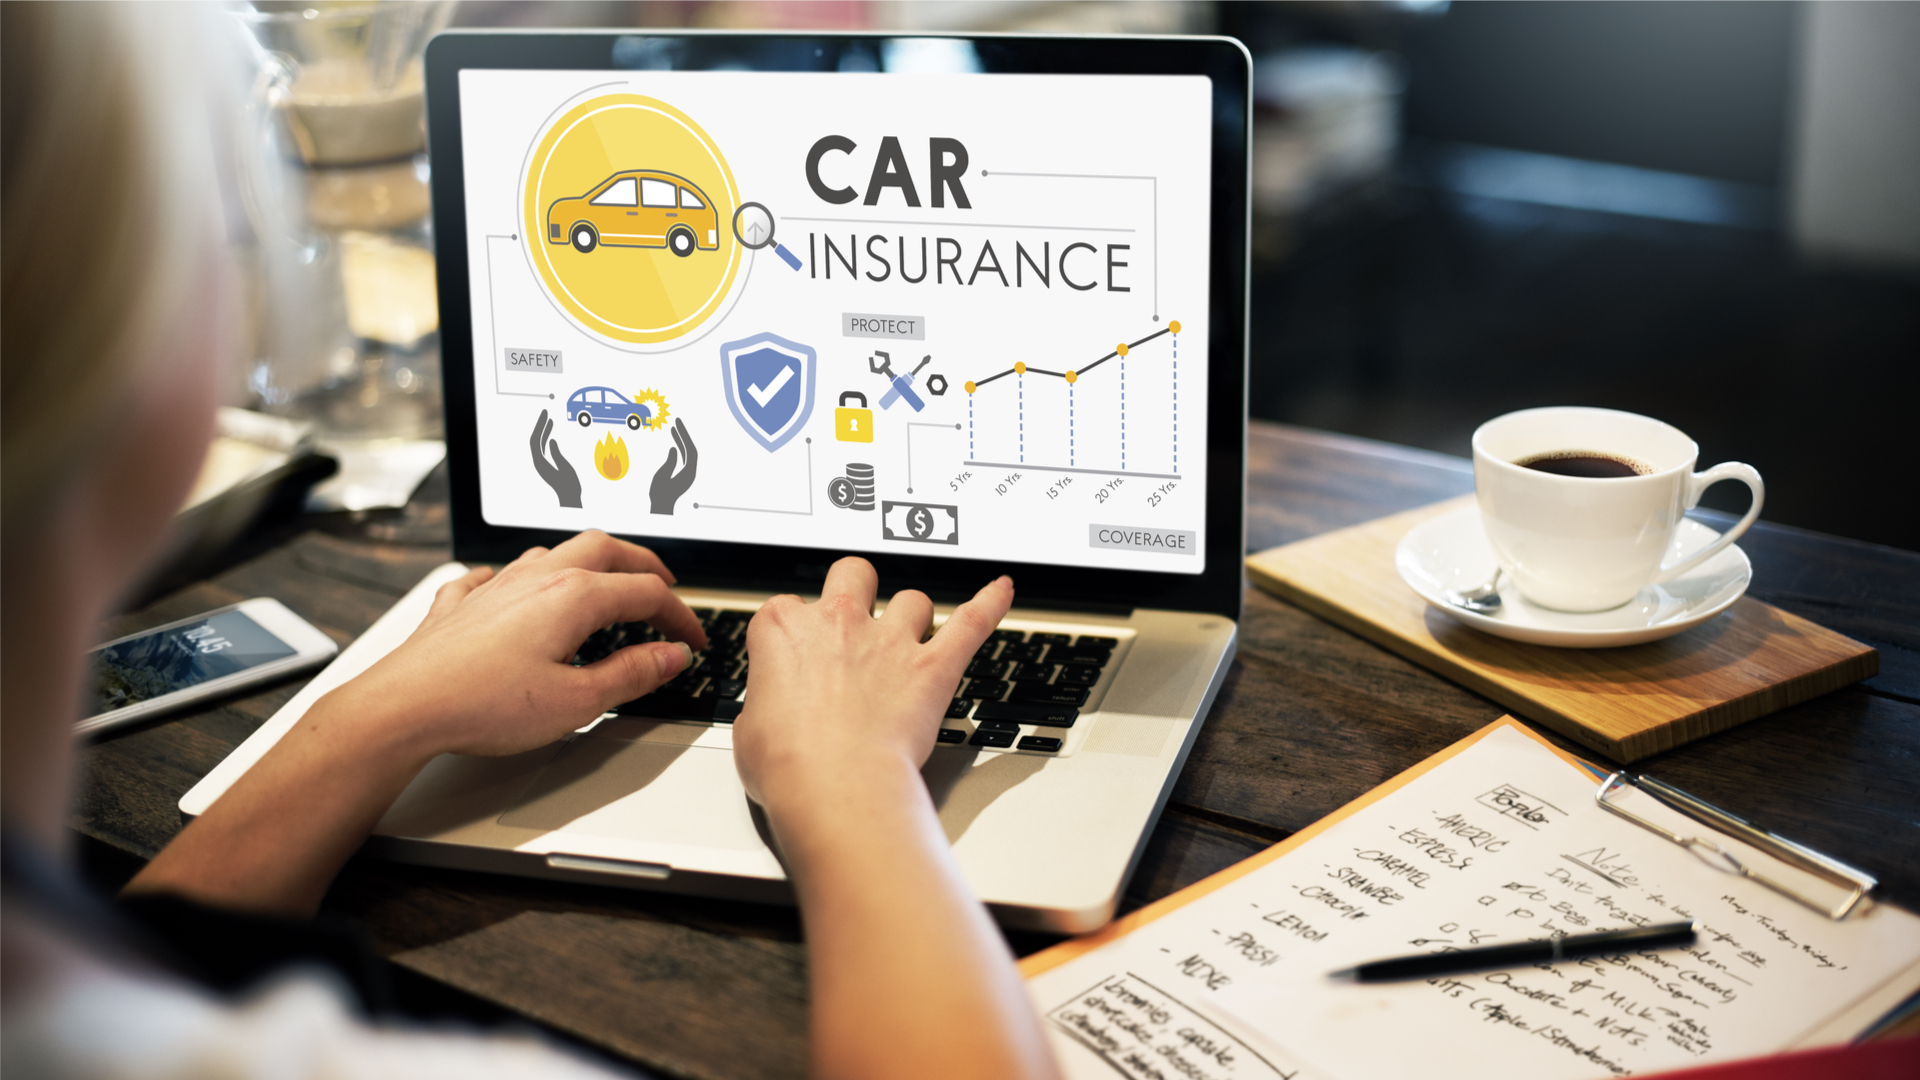 Car insurance admin fees rising